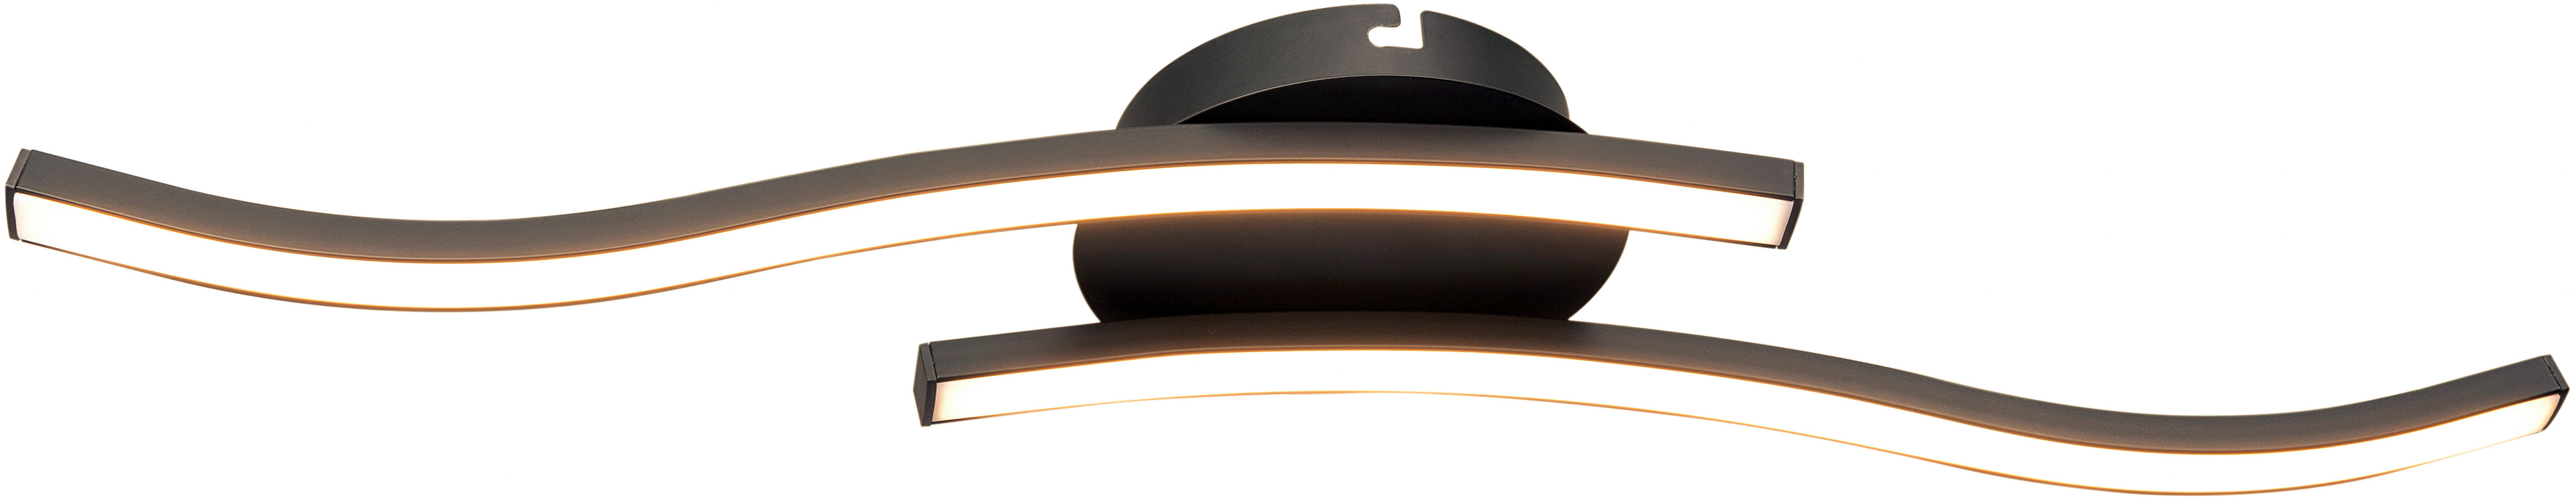 LED-TAKLAMPA 5.1 W    55,4/12/7 cm  - svart, Basics, metall/plast (55,4/12/7cm) - Xora